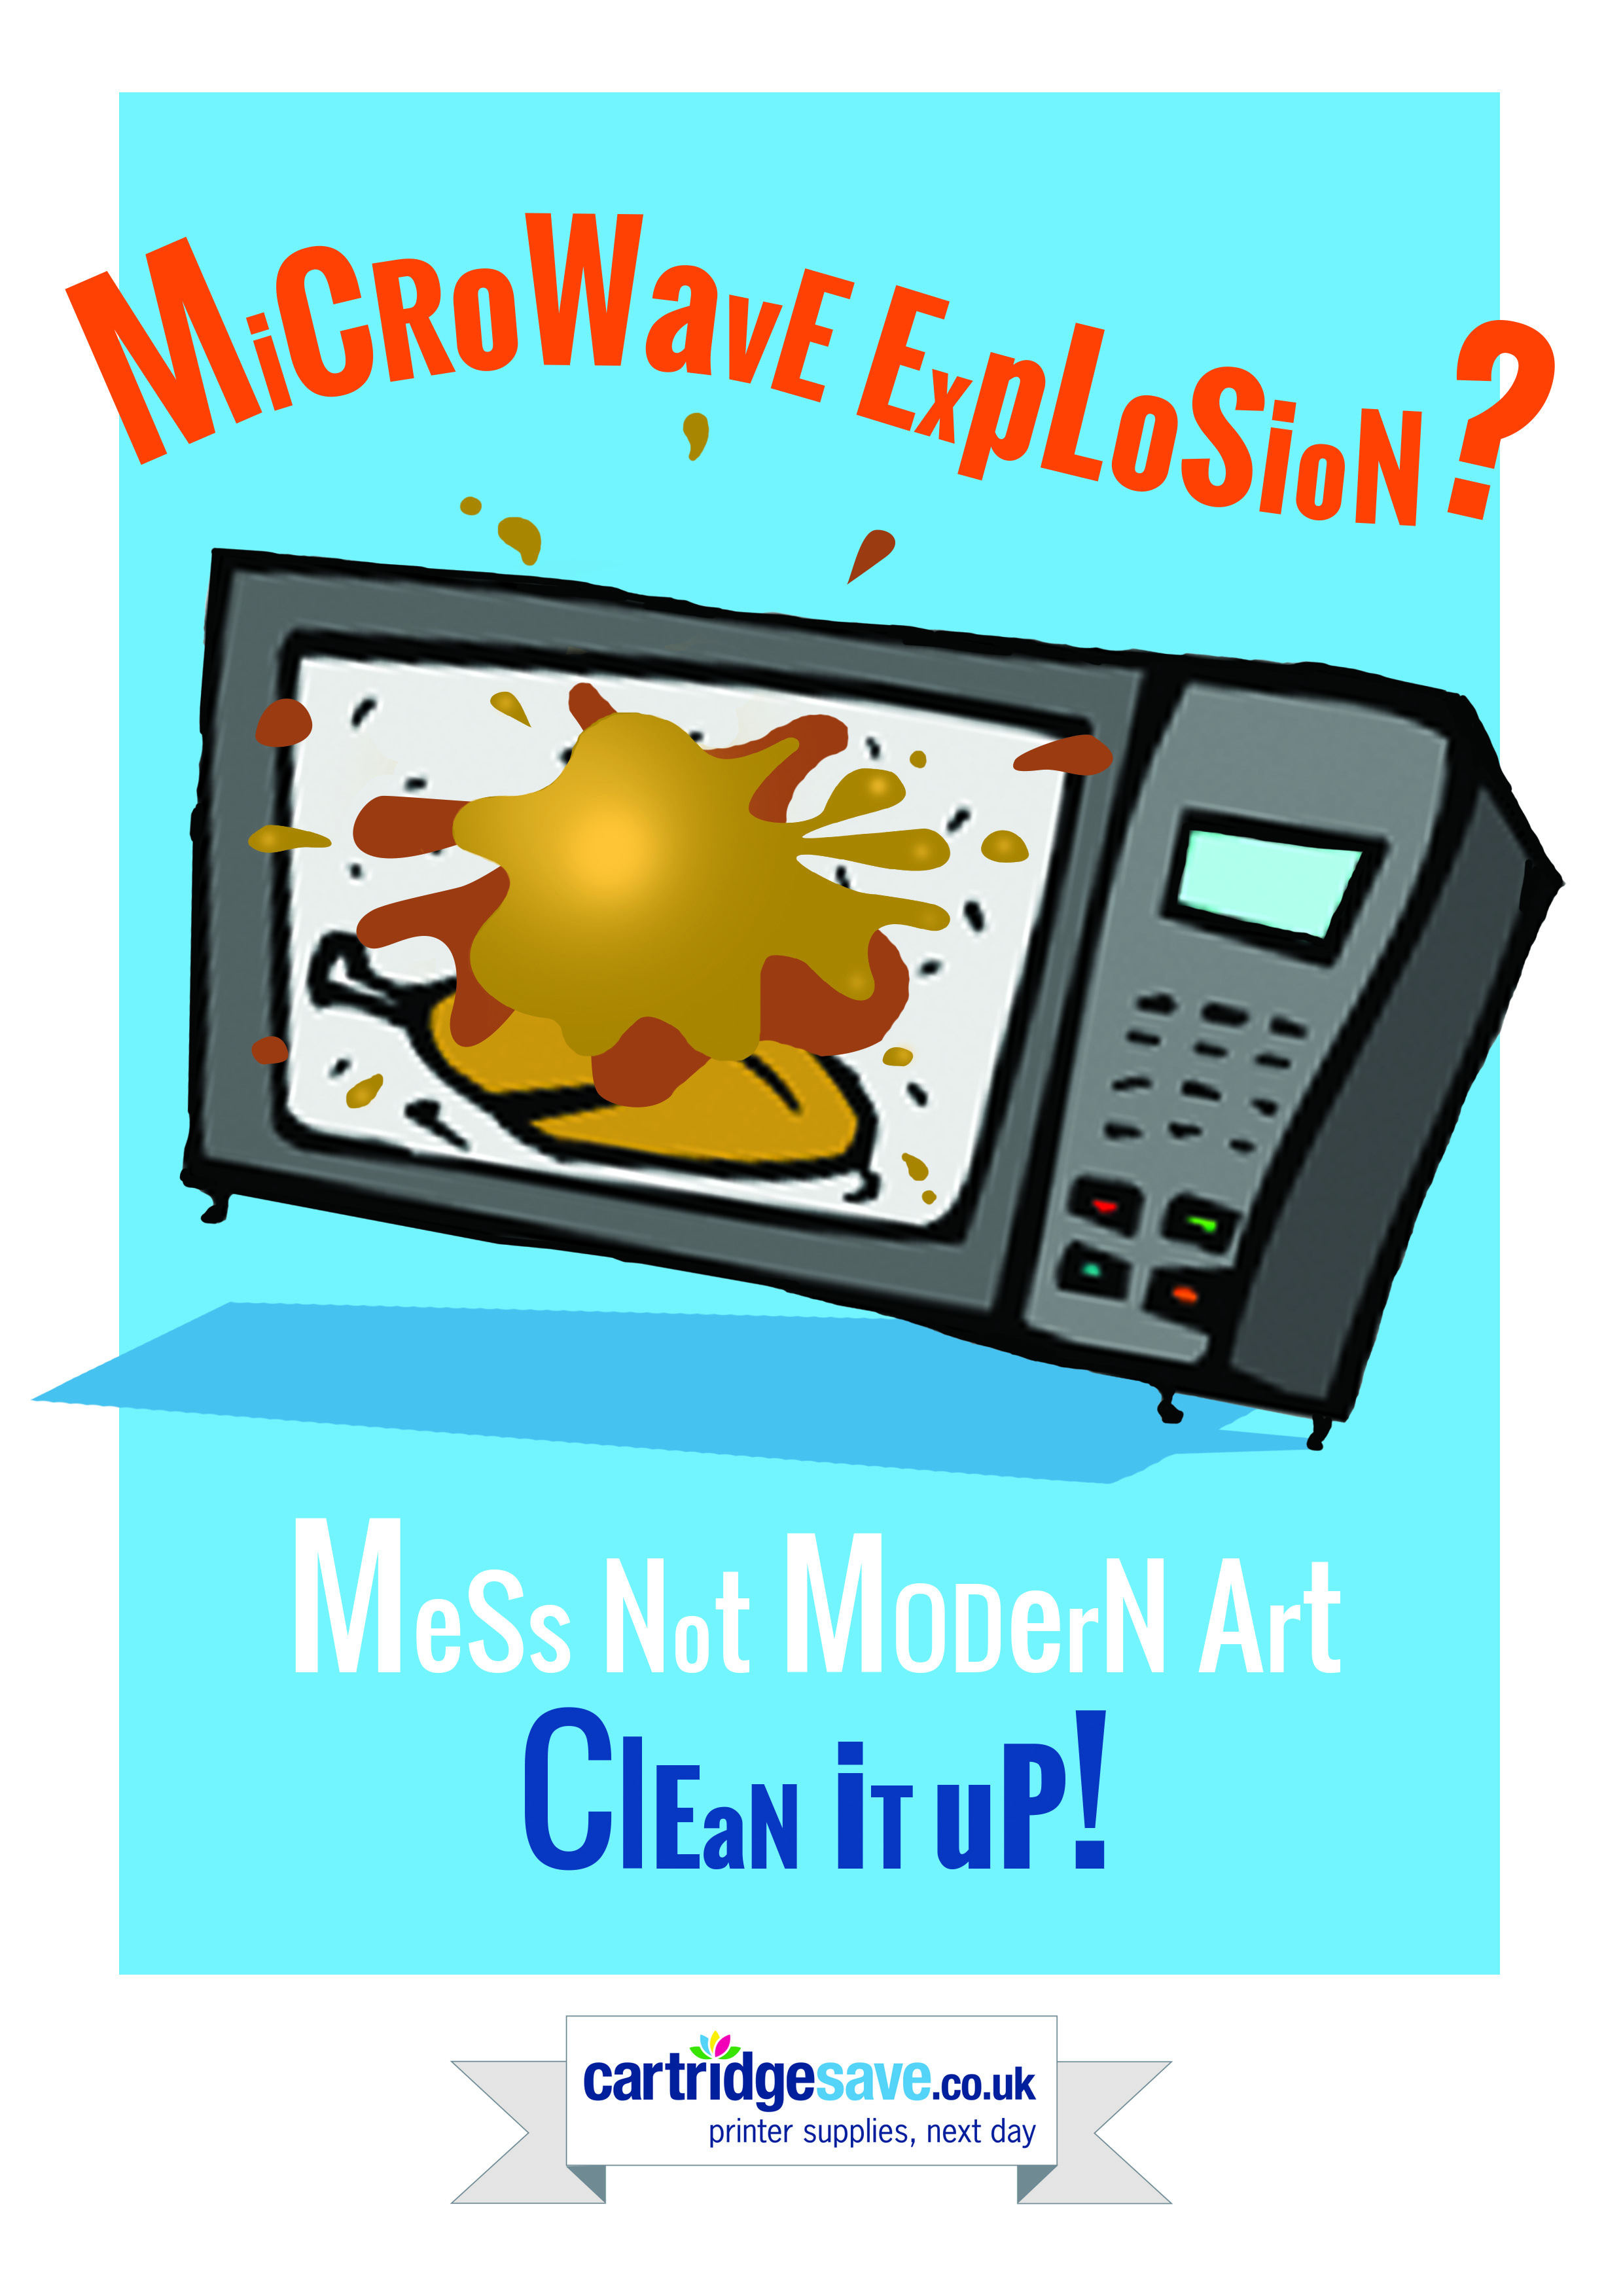 Actualizar 41+ imagen office microwave - Abzlocal.mx